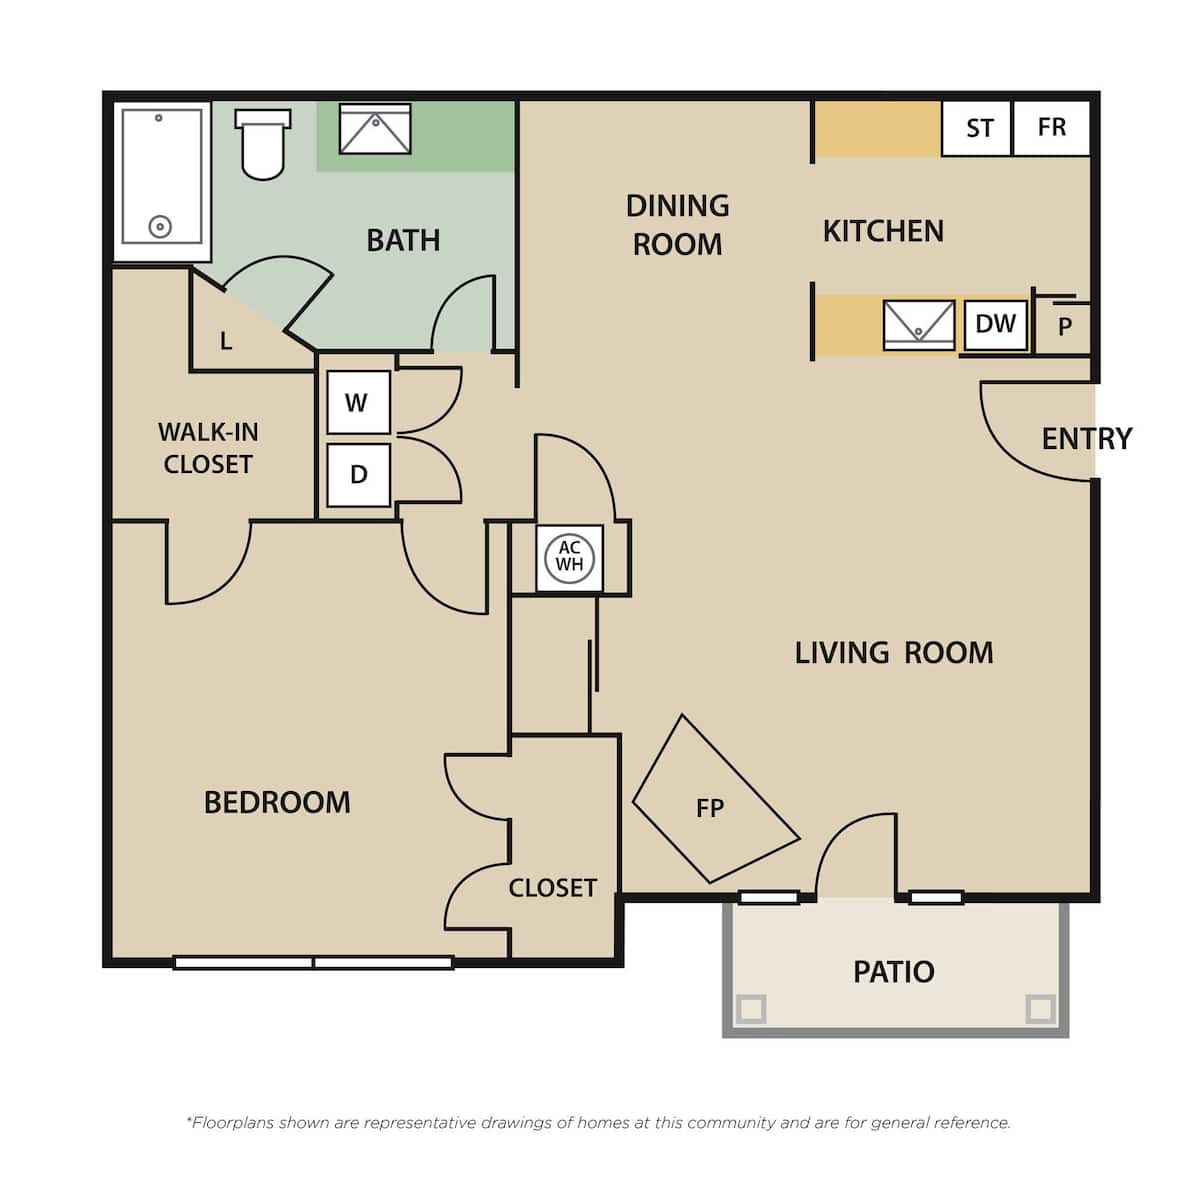 Floorplan diagram for PARK A6, showing 1 bedroom